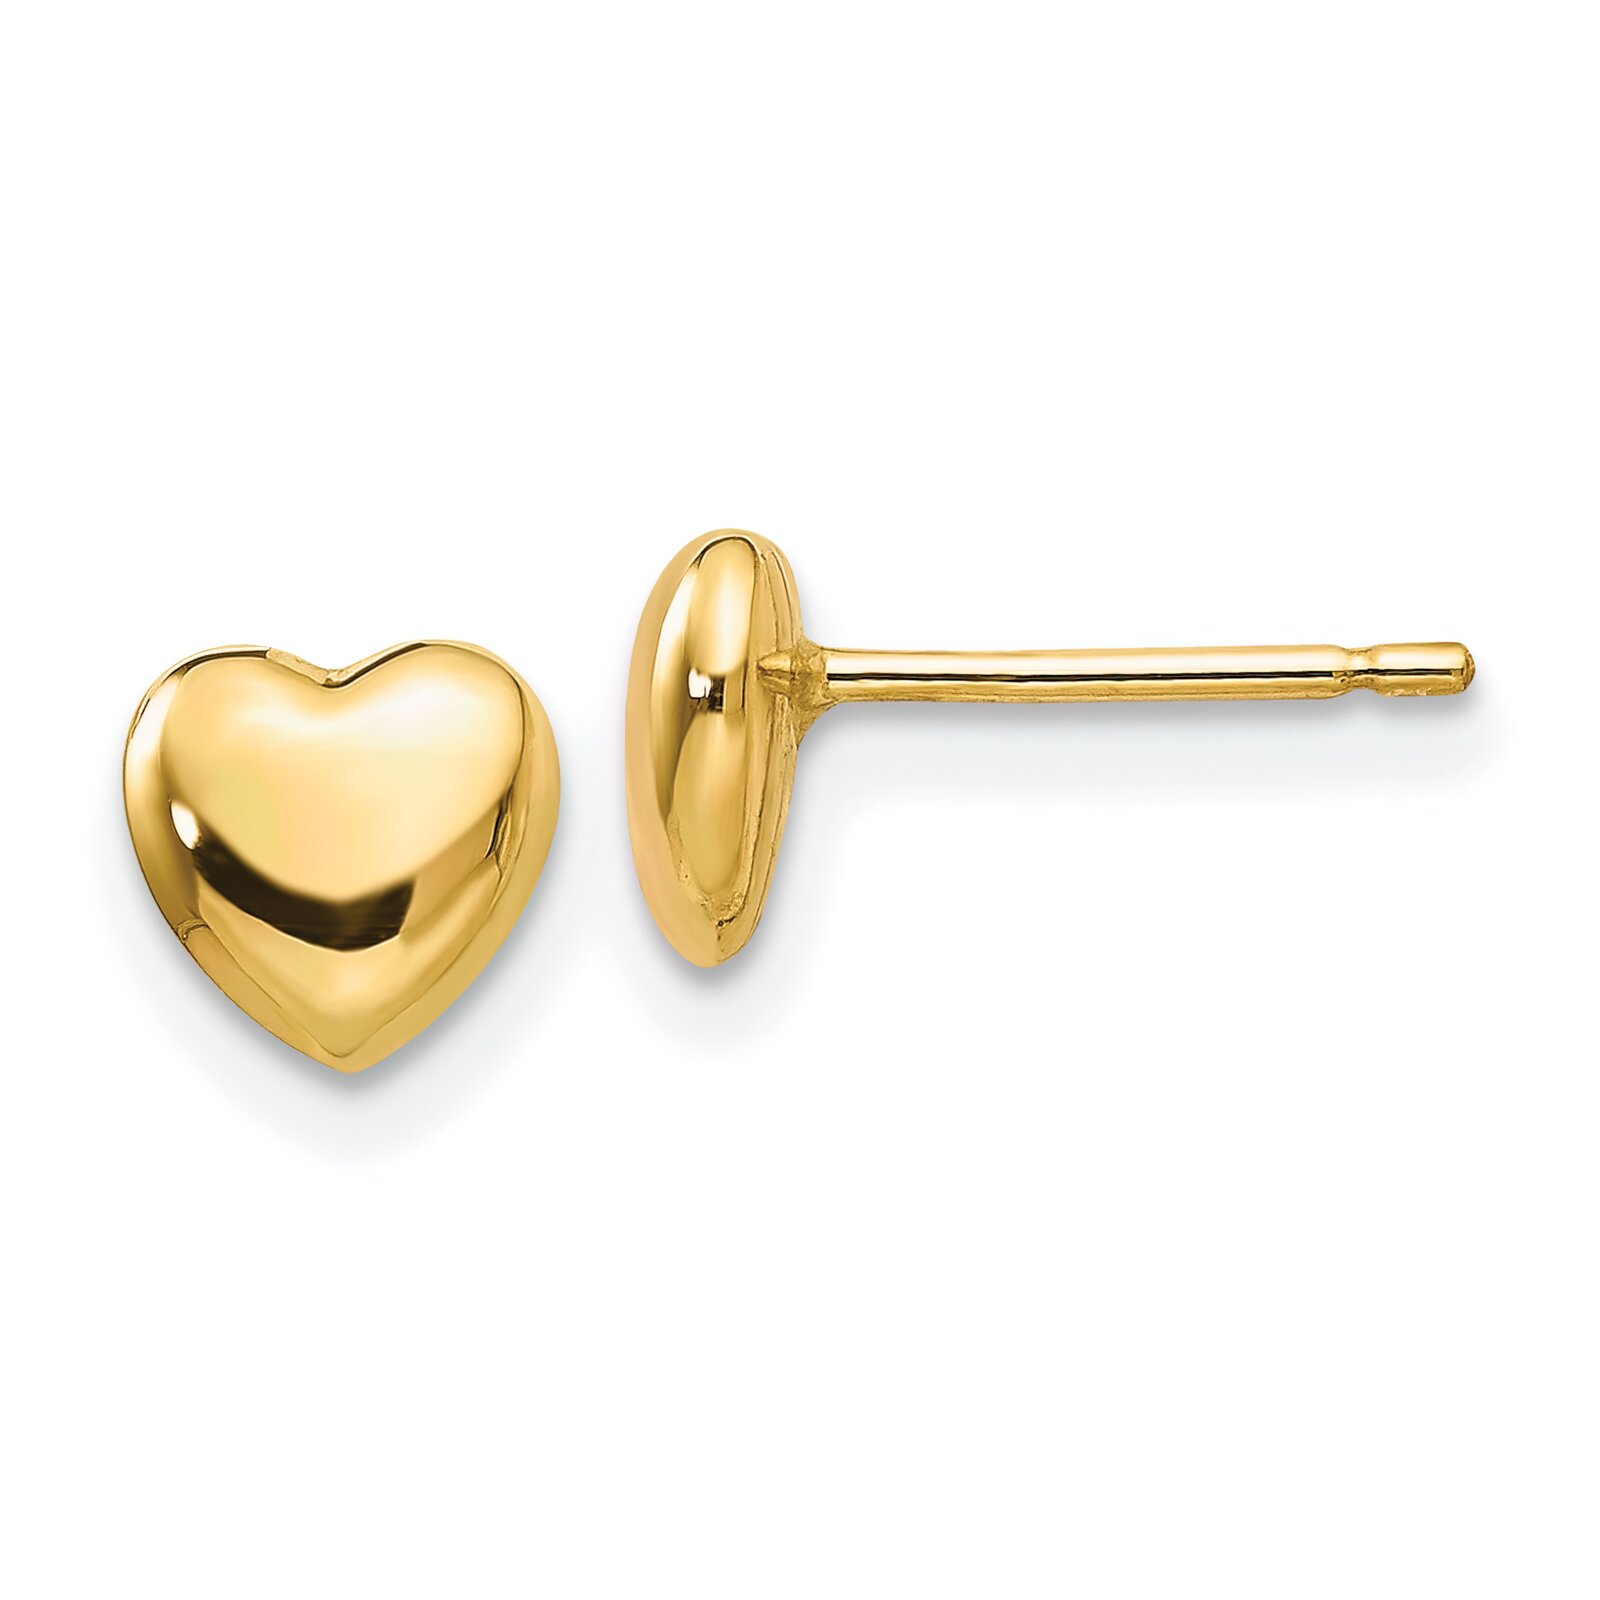 Findingking 14K Yellow Gold Heart Stud Earrings Polished Jewelry